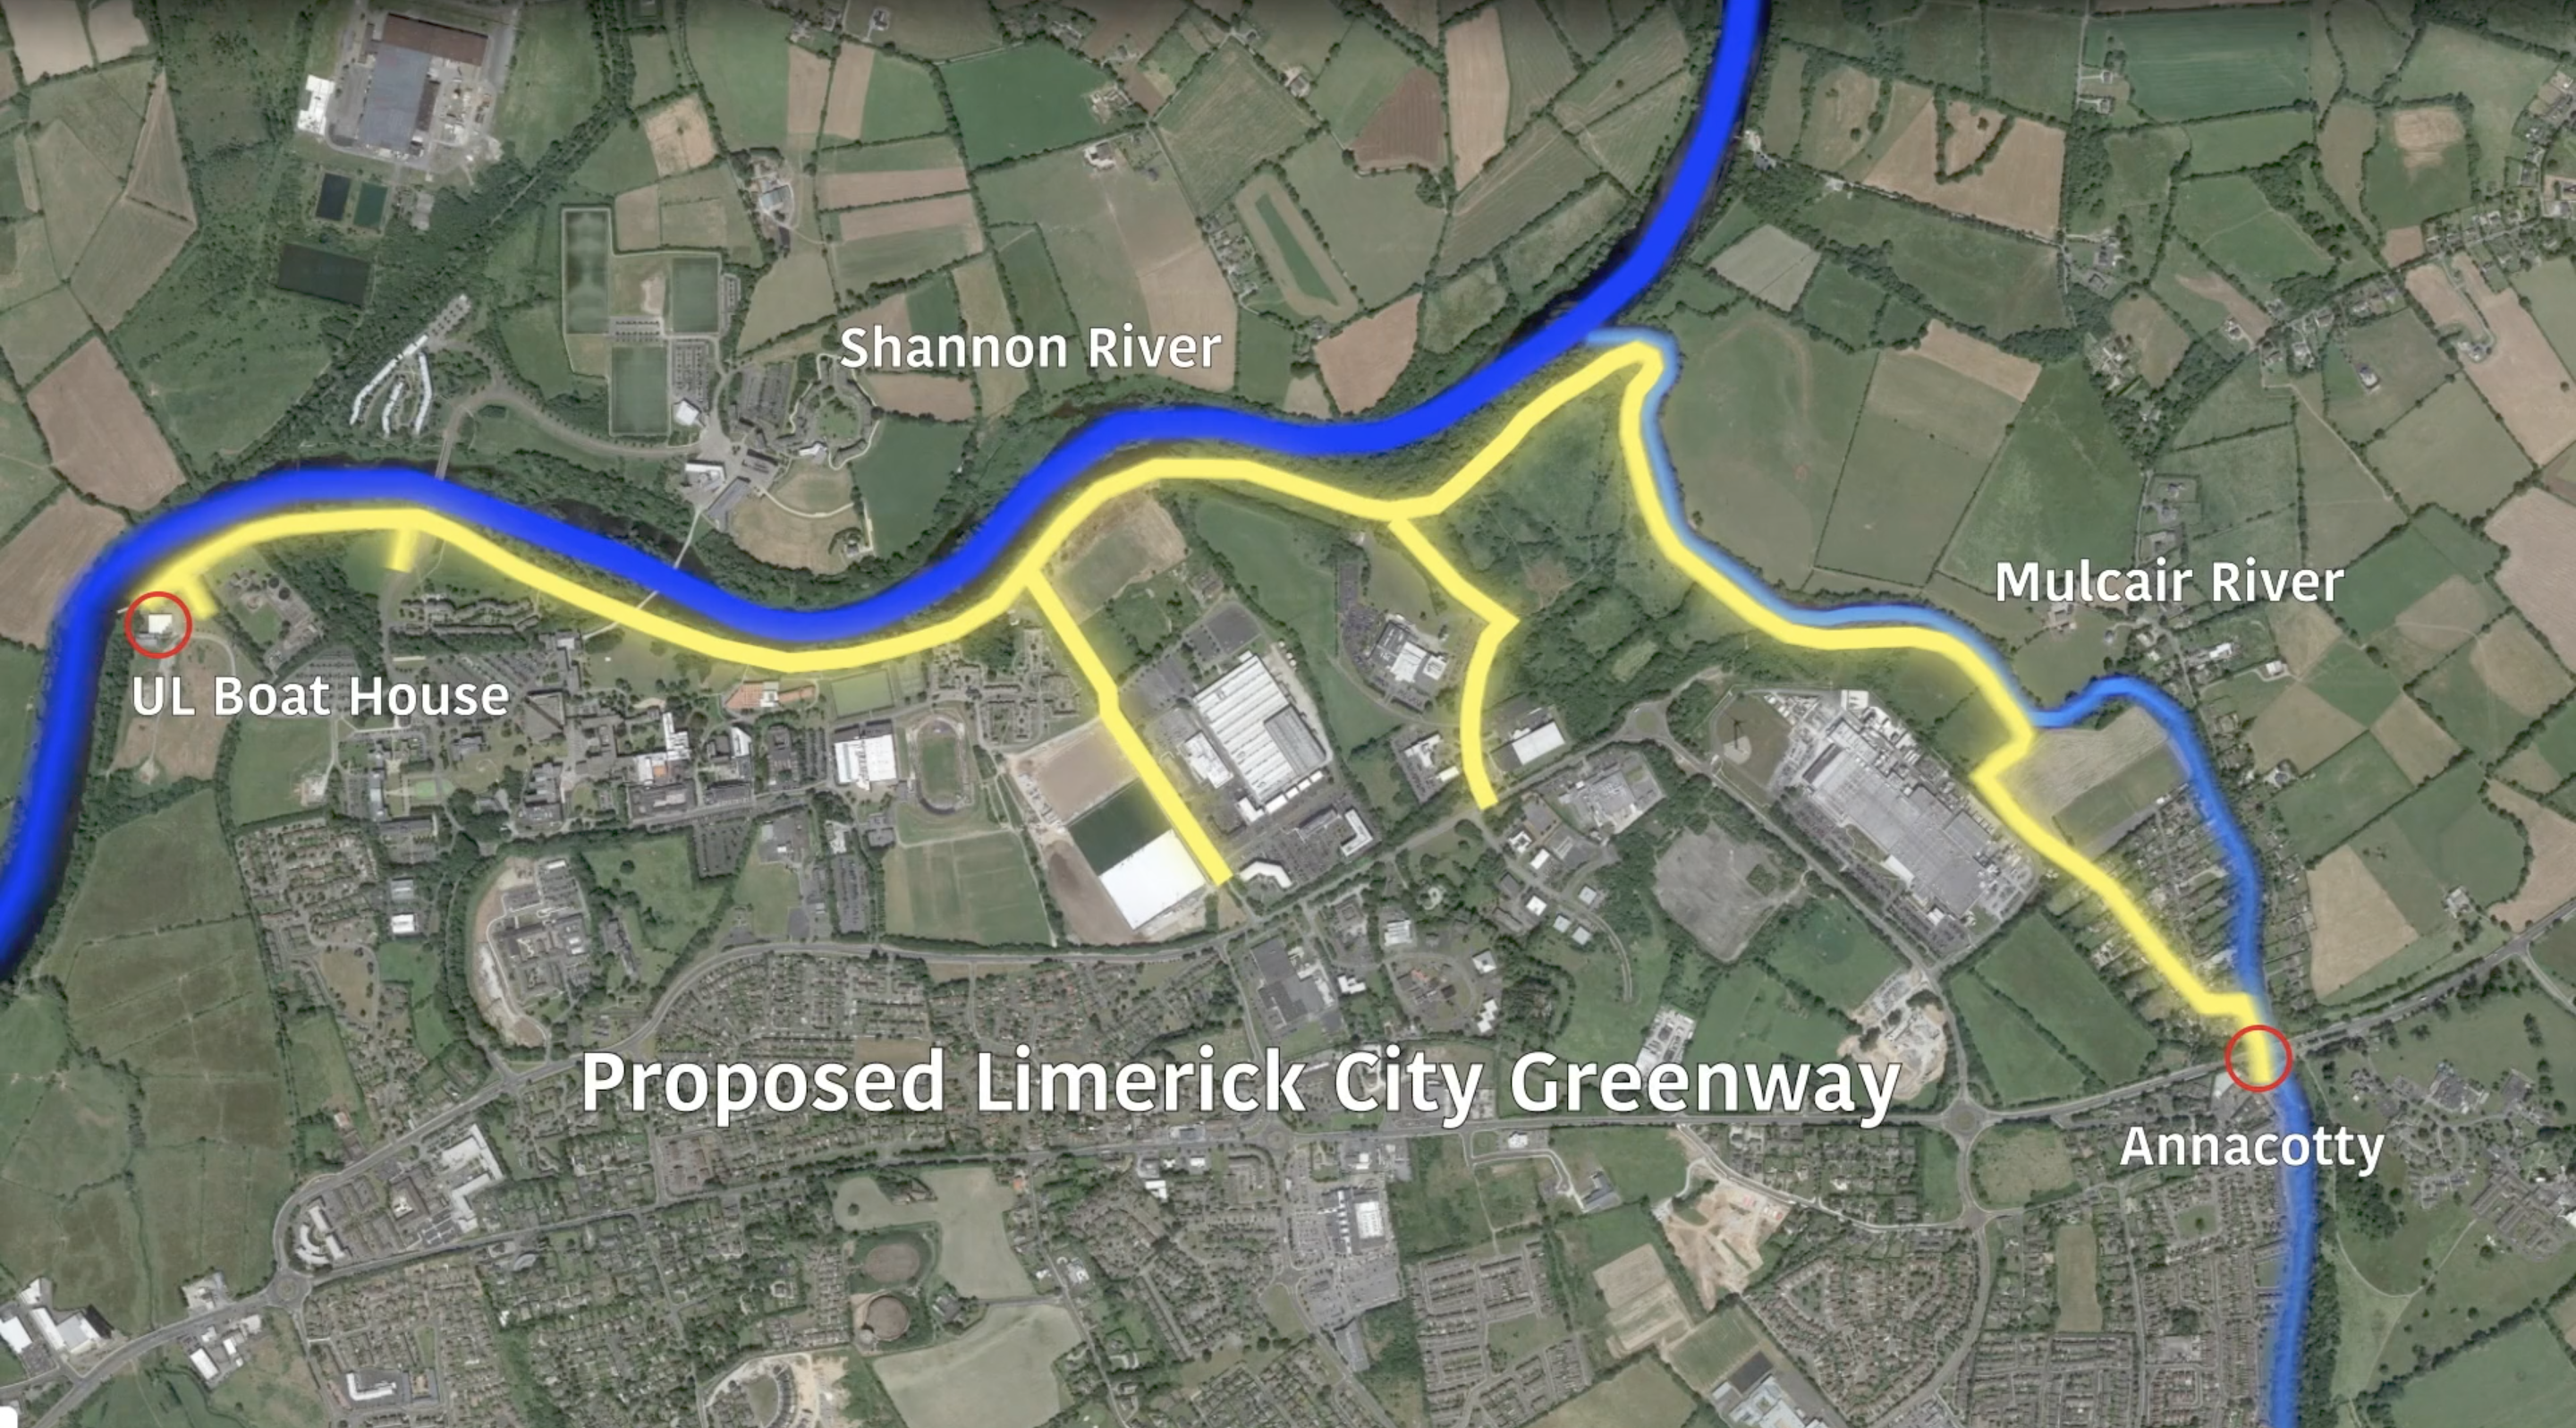 Limerick City Greenway